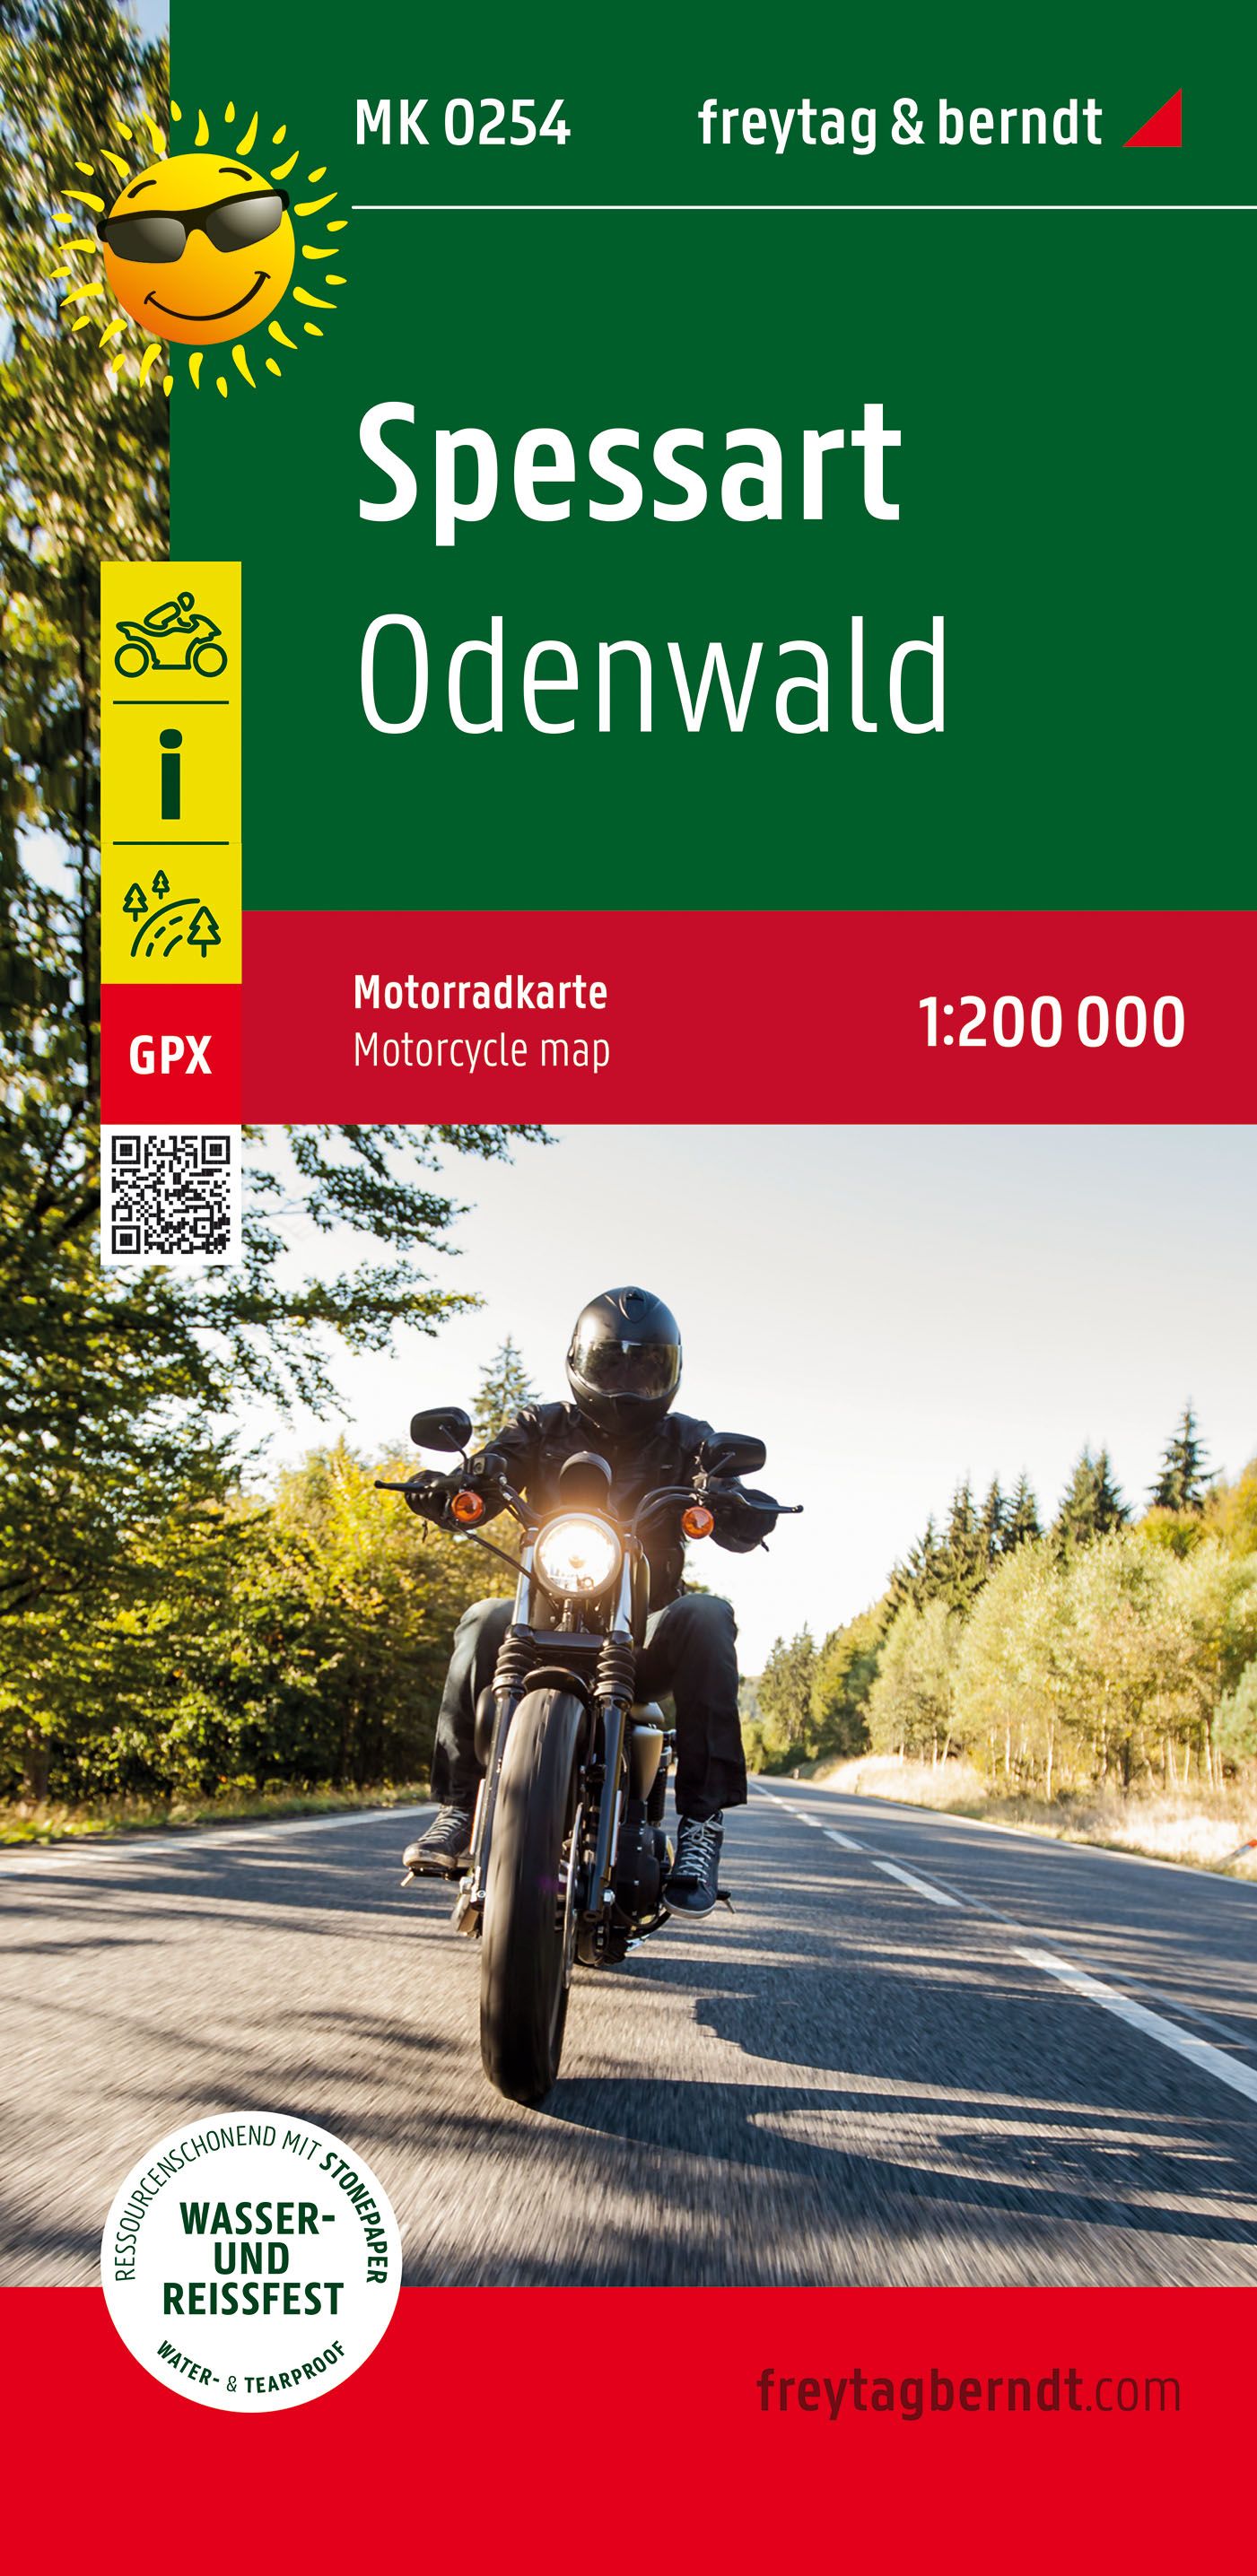 Motorradkarte Spessart - Odenwald 1:200.000 - Freytag & Berndt